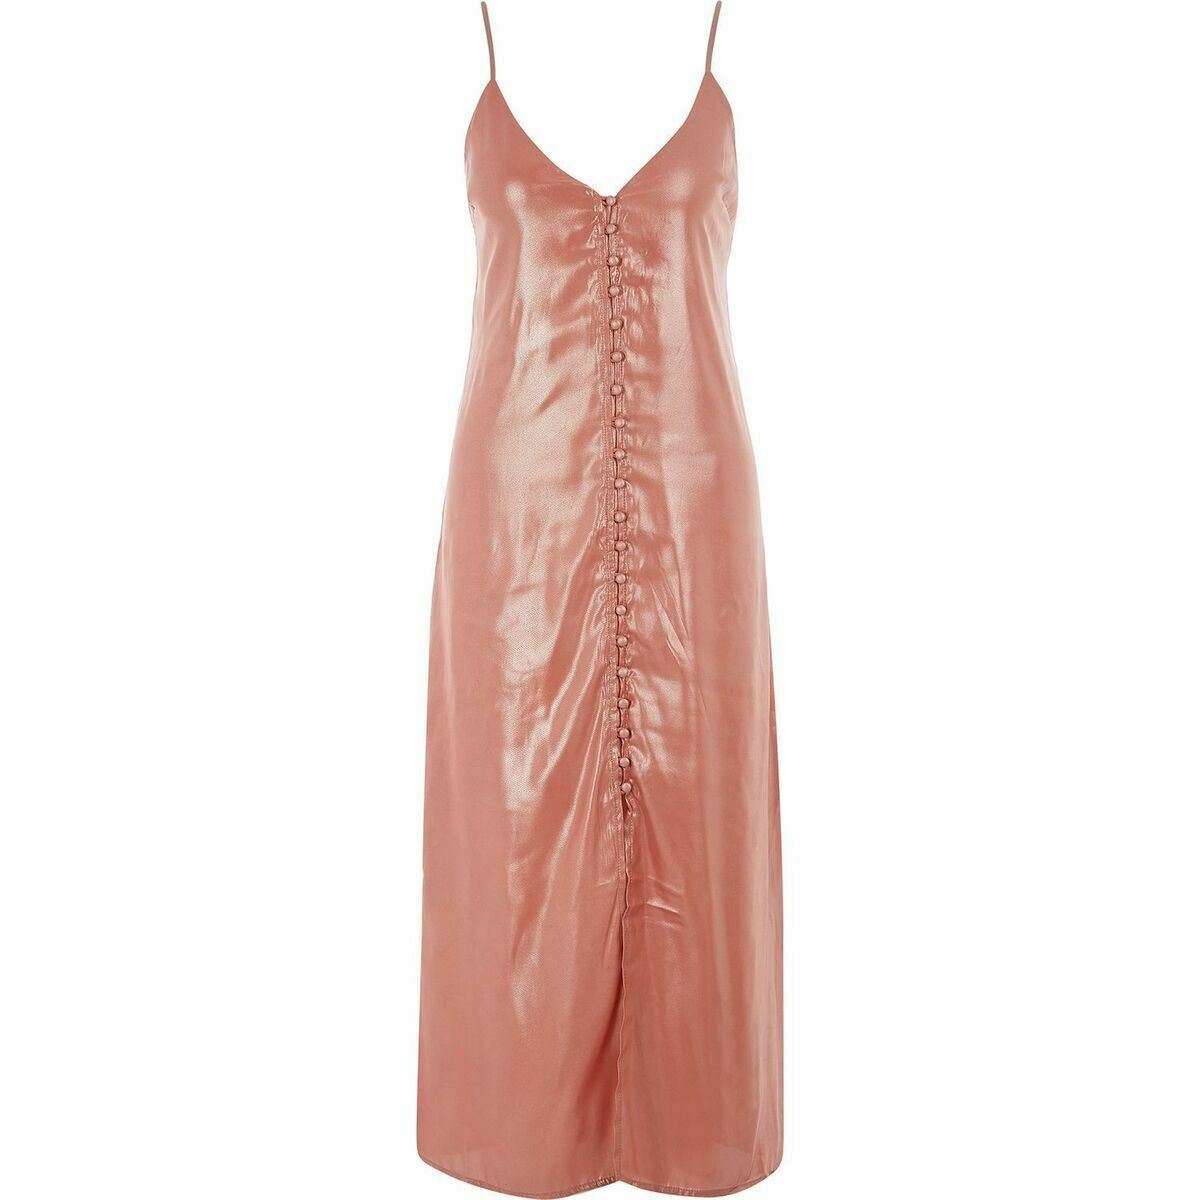 BARDOT Women's High Shine Midi Slip Dress, Coral Pink, size UK 12